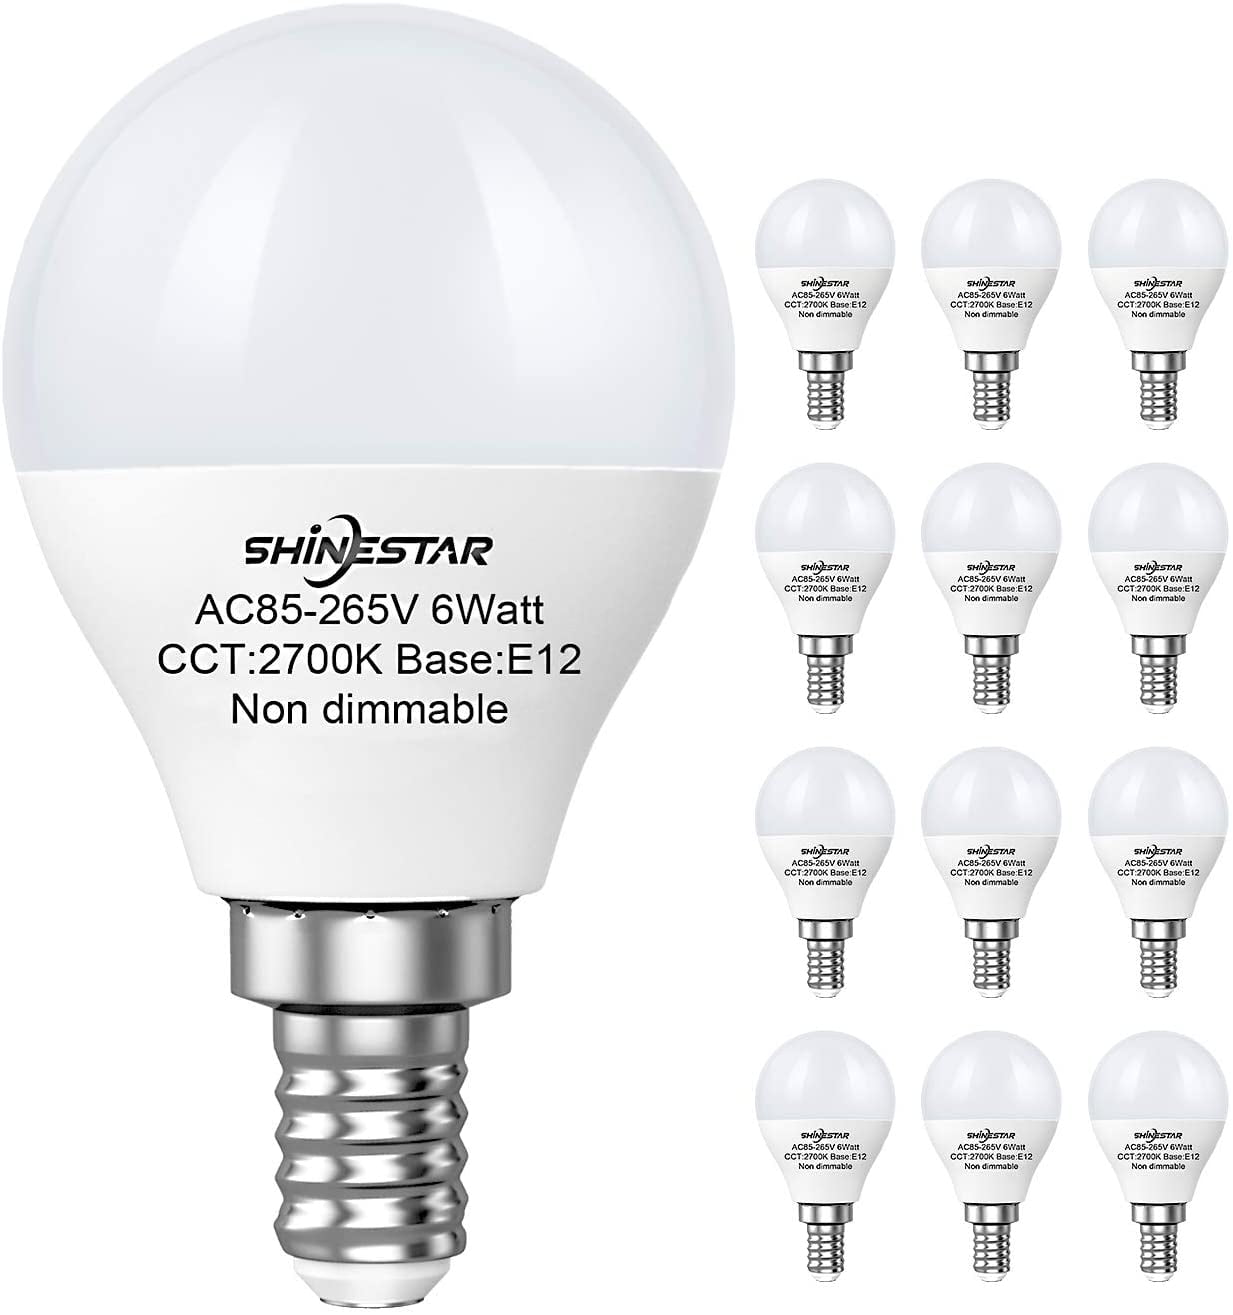 5000K Daylight A15 SHINESTAR 3-Pack Ceiling Fan Light Bulbs 60watt Equivalent 